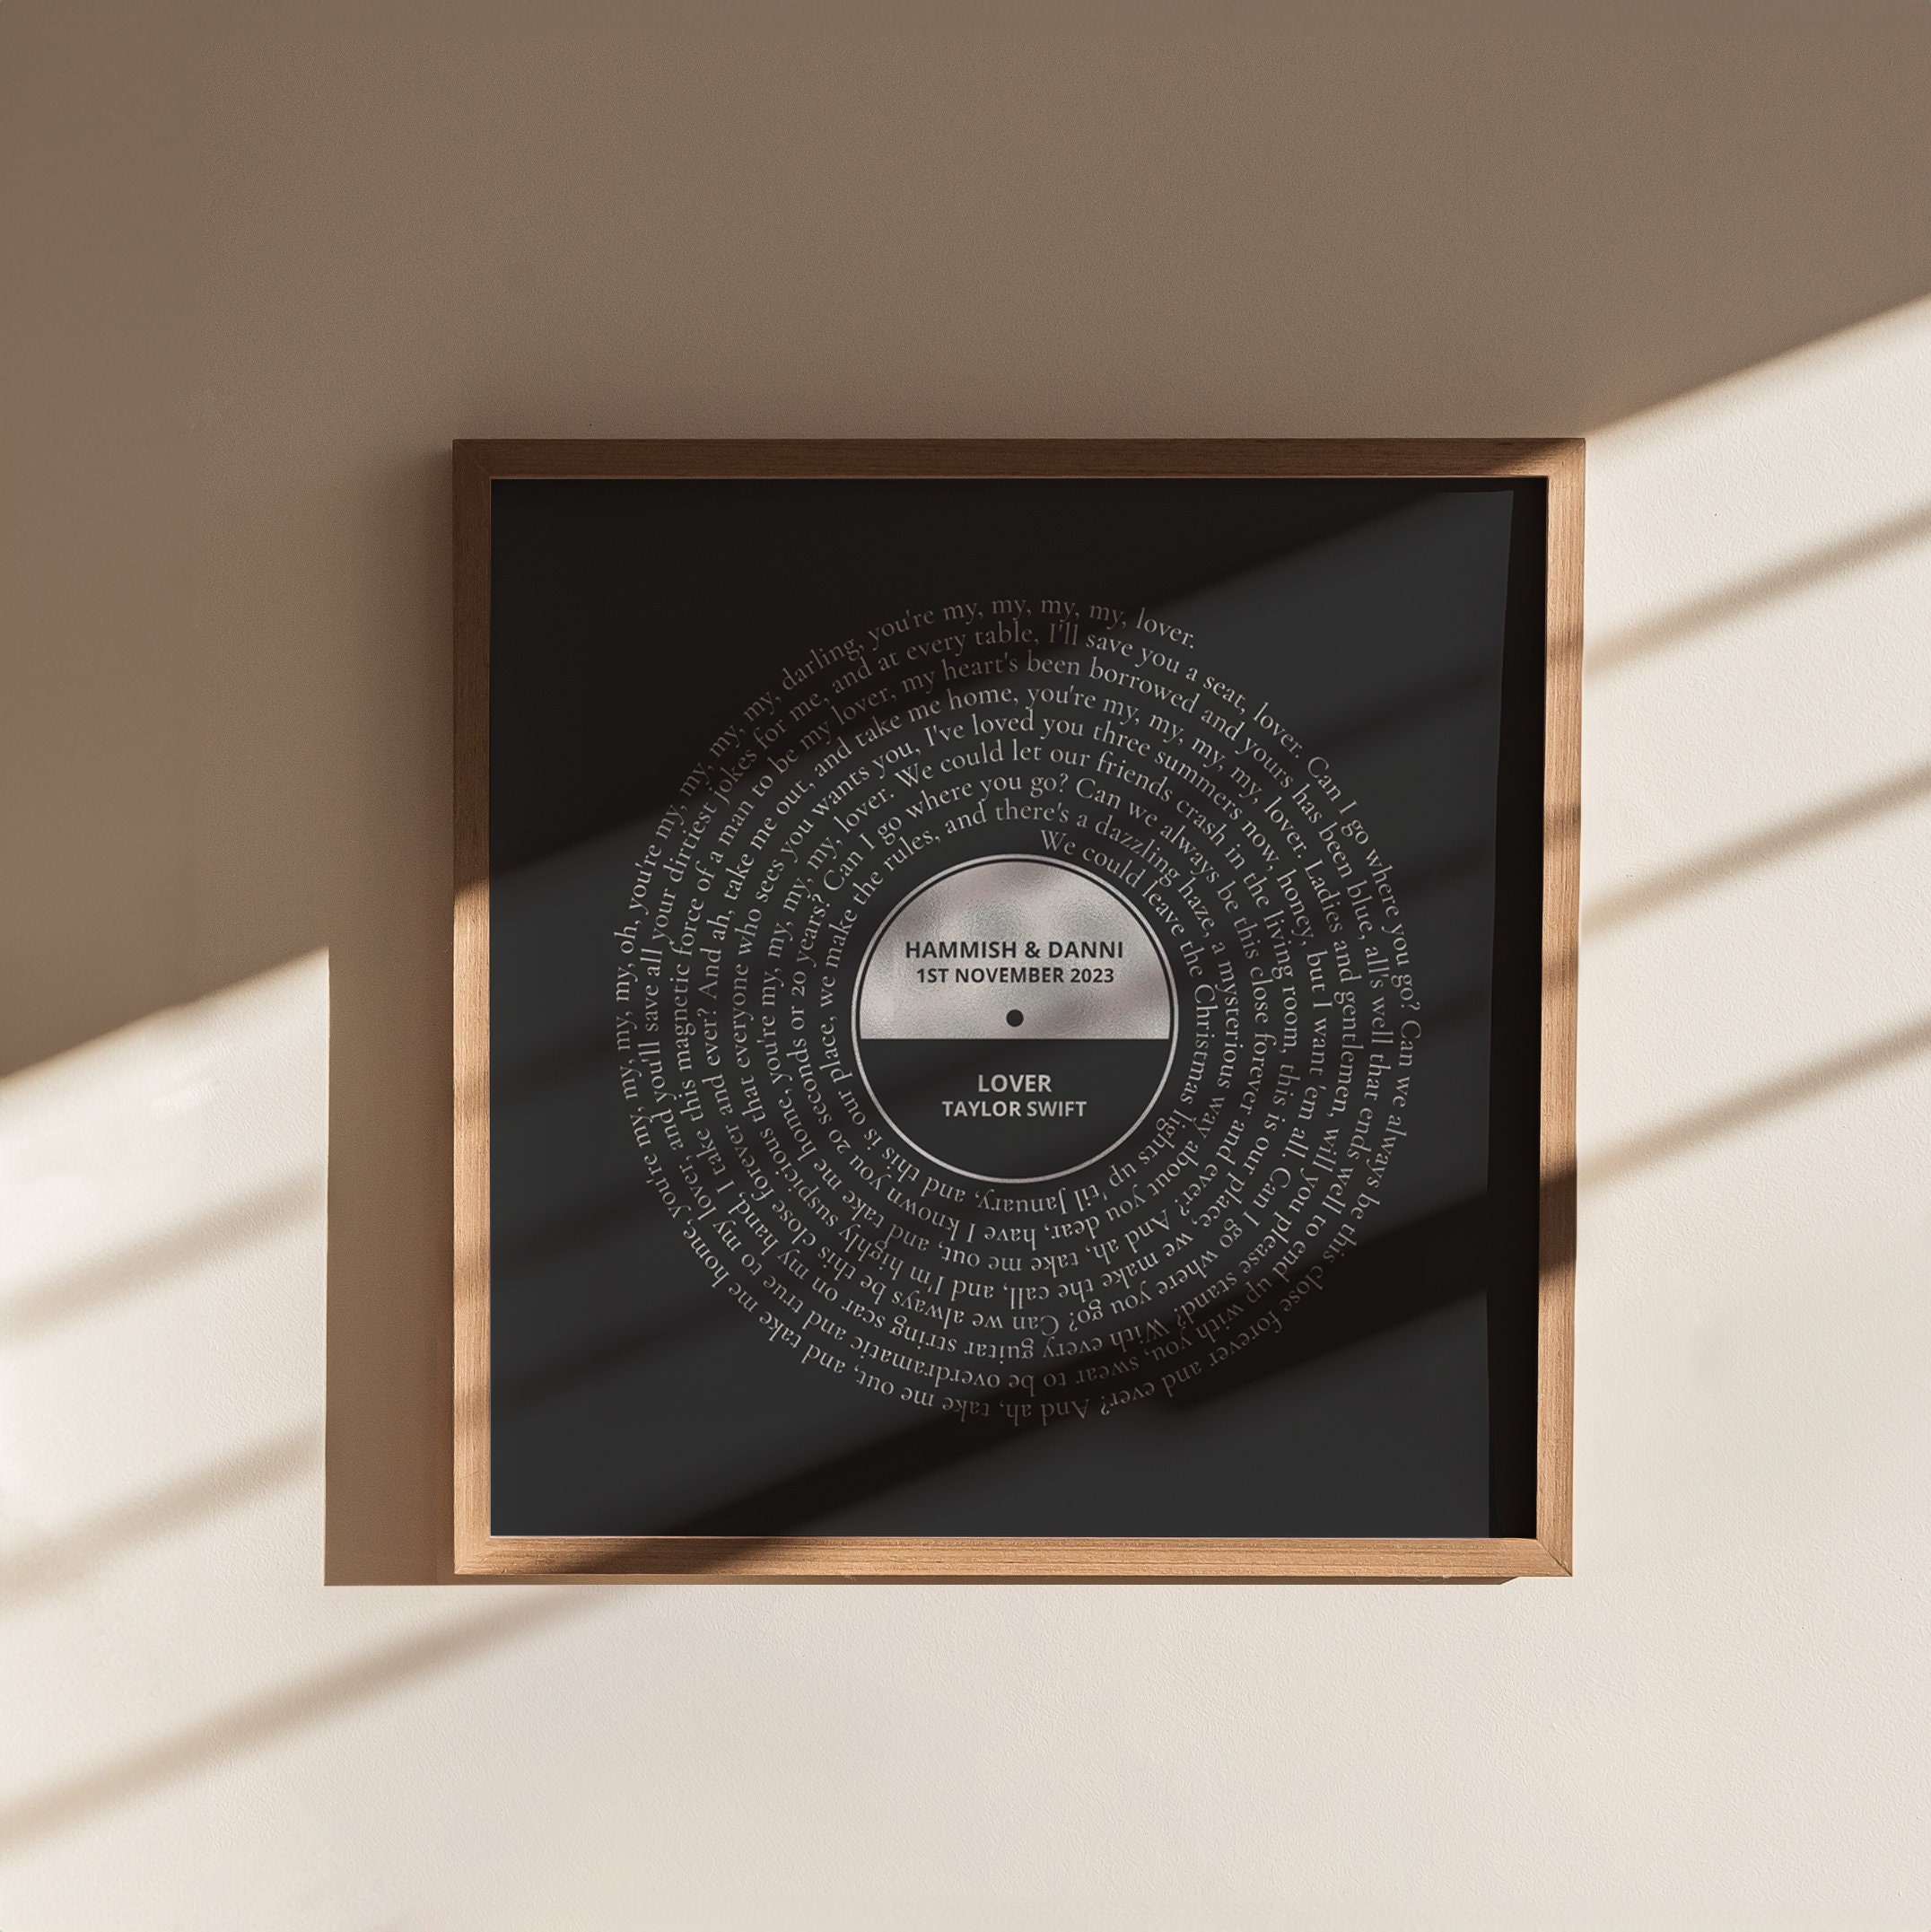 Bring Me The Horizon Doomed Vinyl Record Song Lyric Print - Song Lyric  Designs